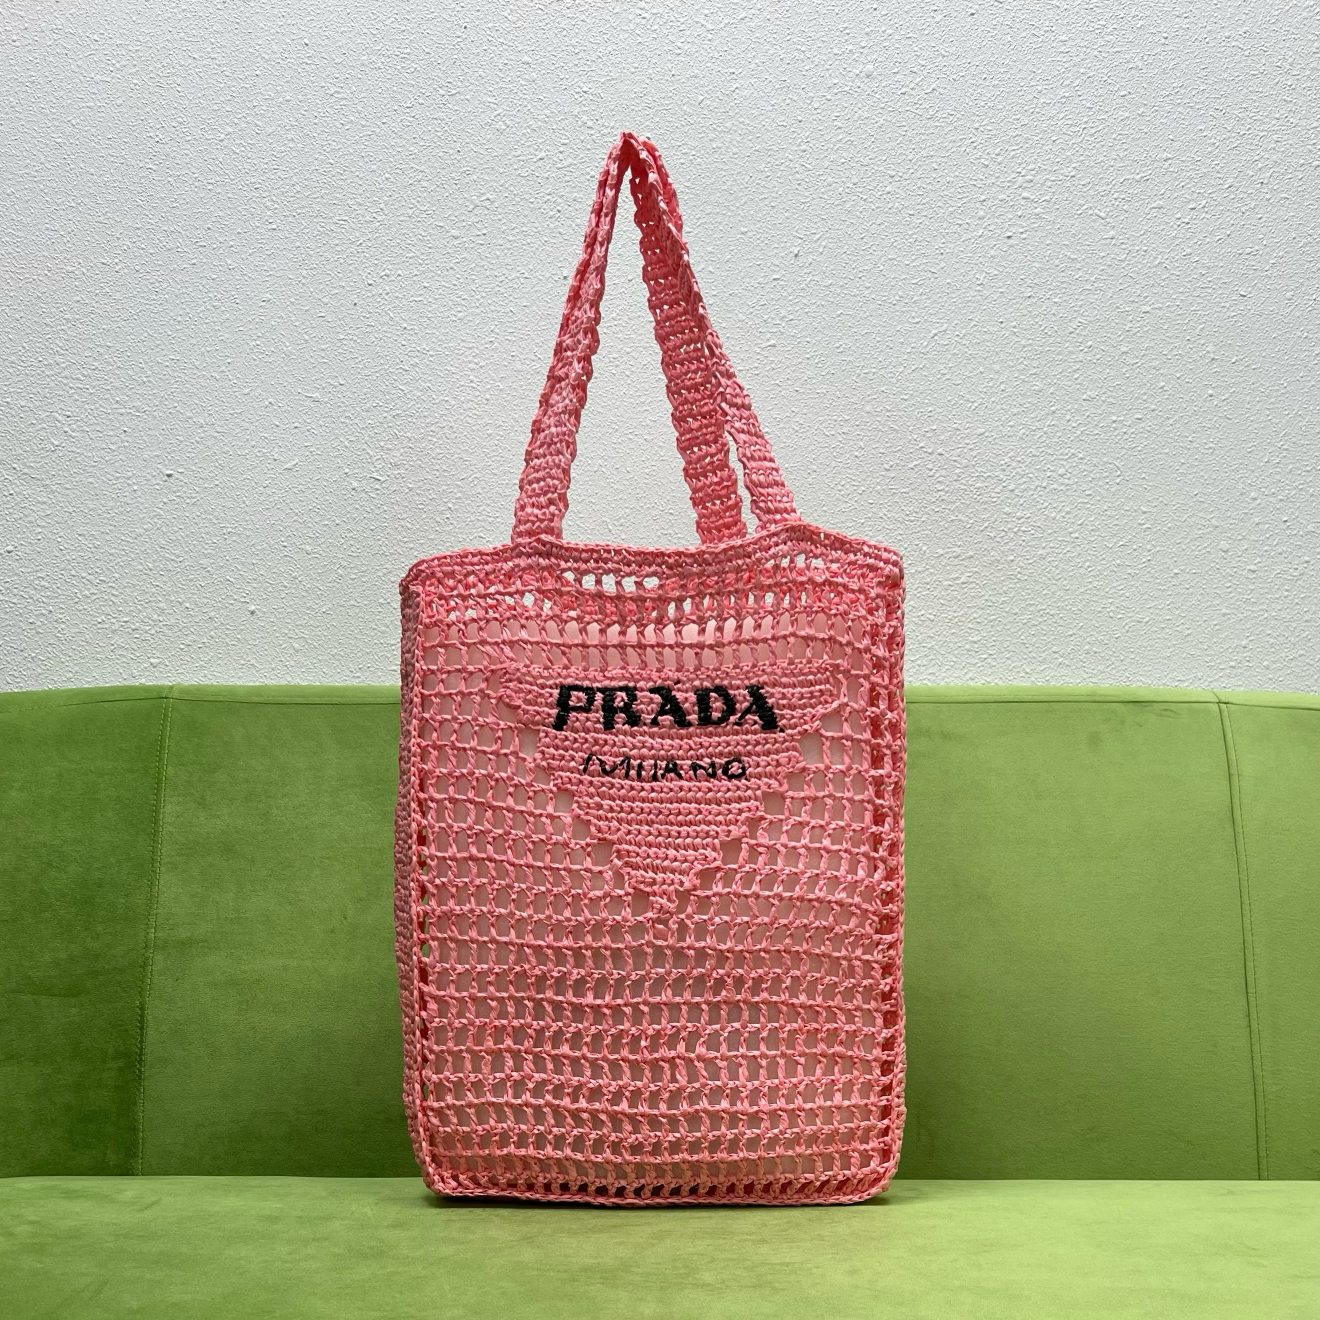 【P570】Prada包包价格 普拉达22年新款编织方形镂空包手提购物包 玫红